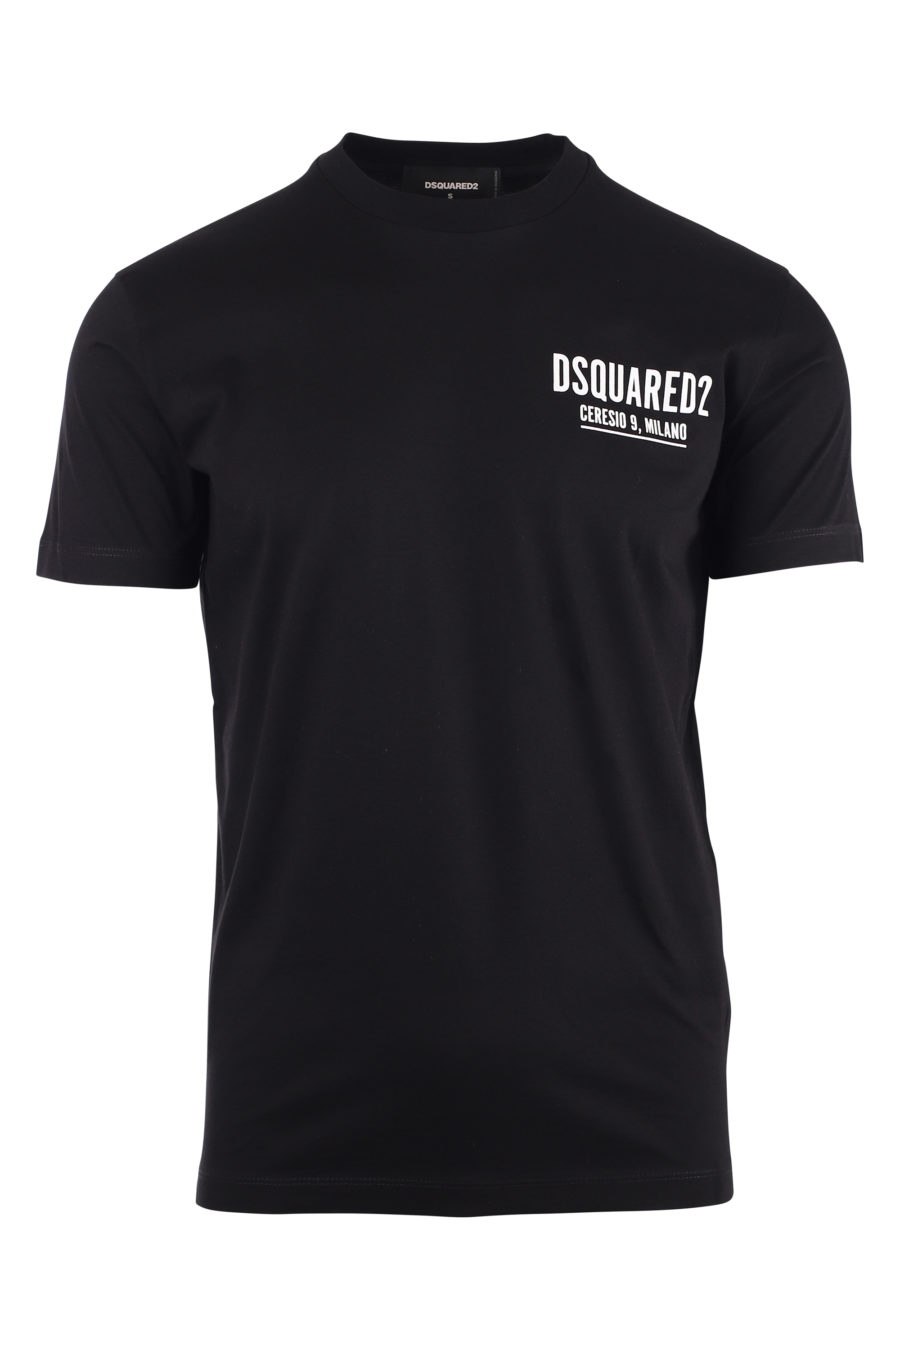 T-shirt noir avec petit logo ceresio 9 - IMG 9729